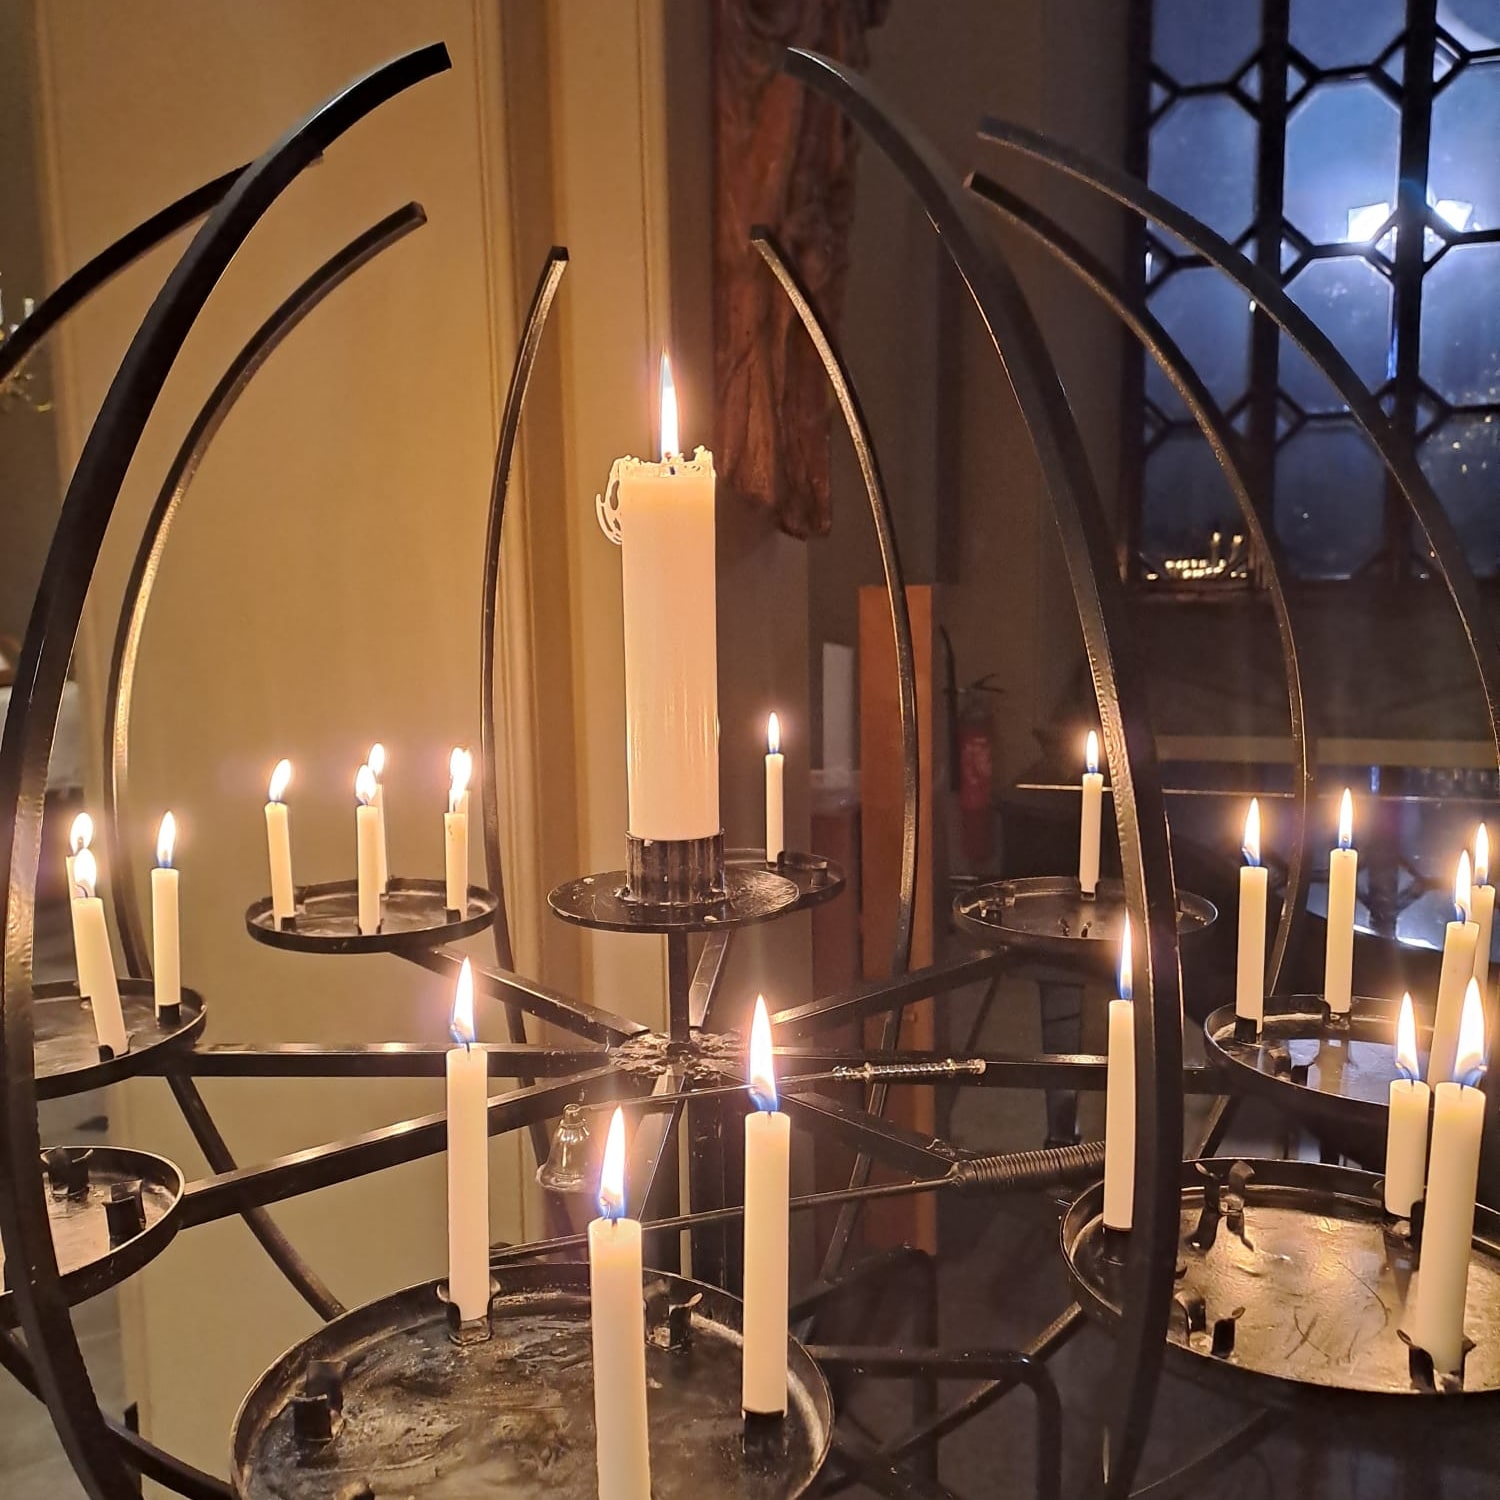 många ljus i Helsinge kyrka S:t Lars